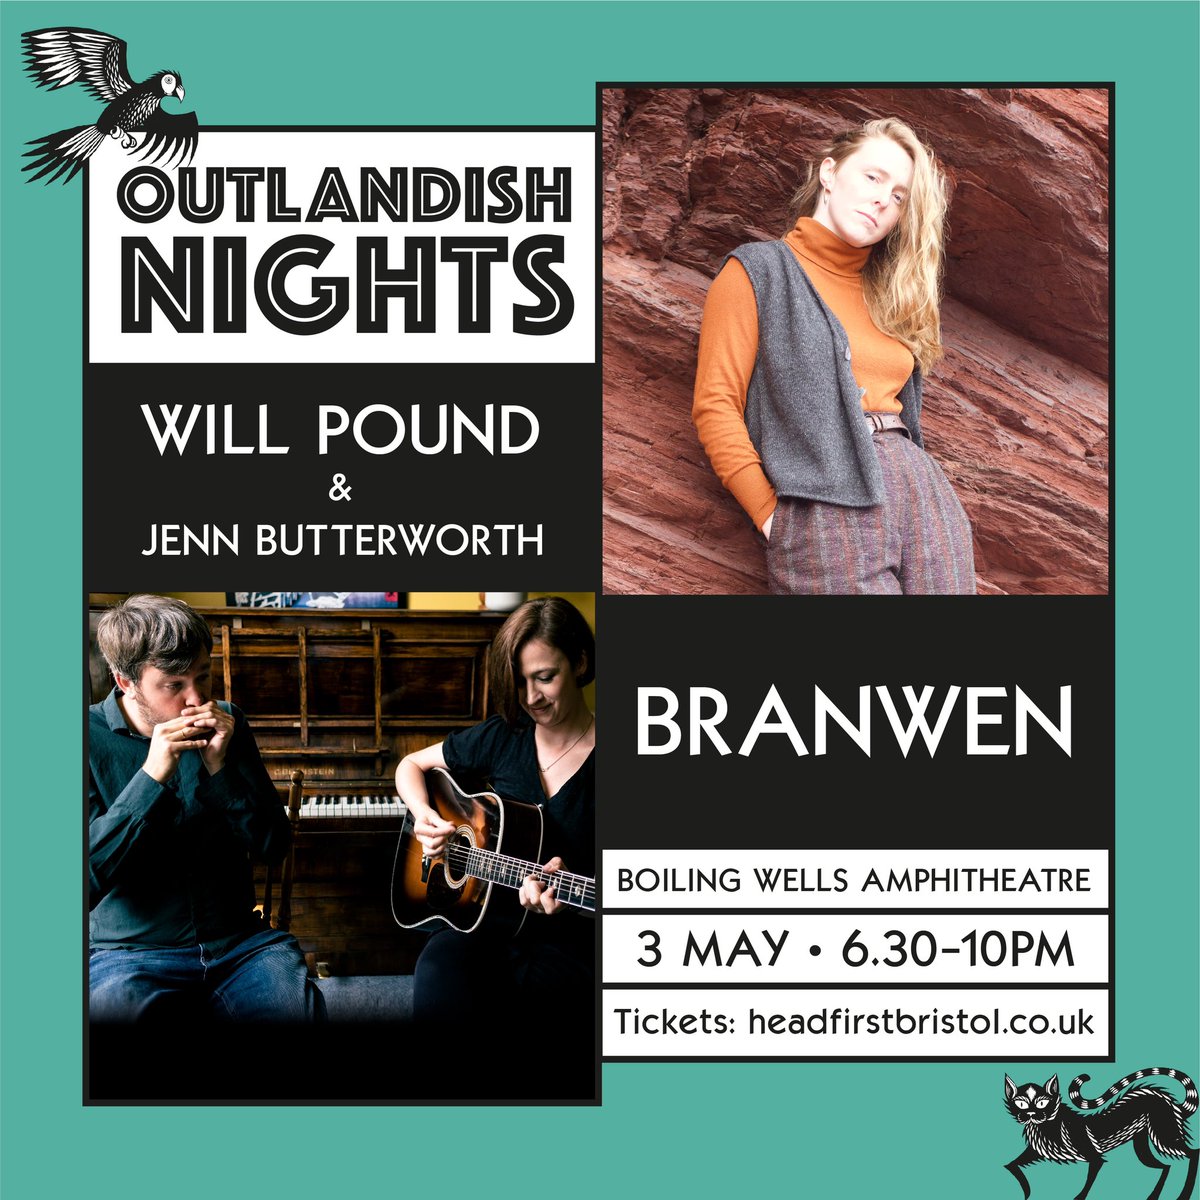 I’m playing in #Bristol next month with @willharmonica - at Boiling Wells Amphitheatre! #bristolfolk #bristollivemusic #outlandishnights